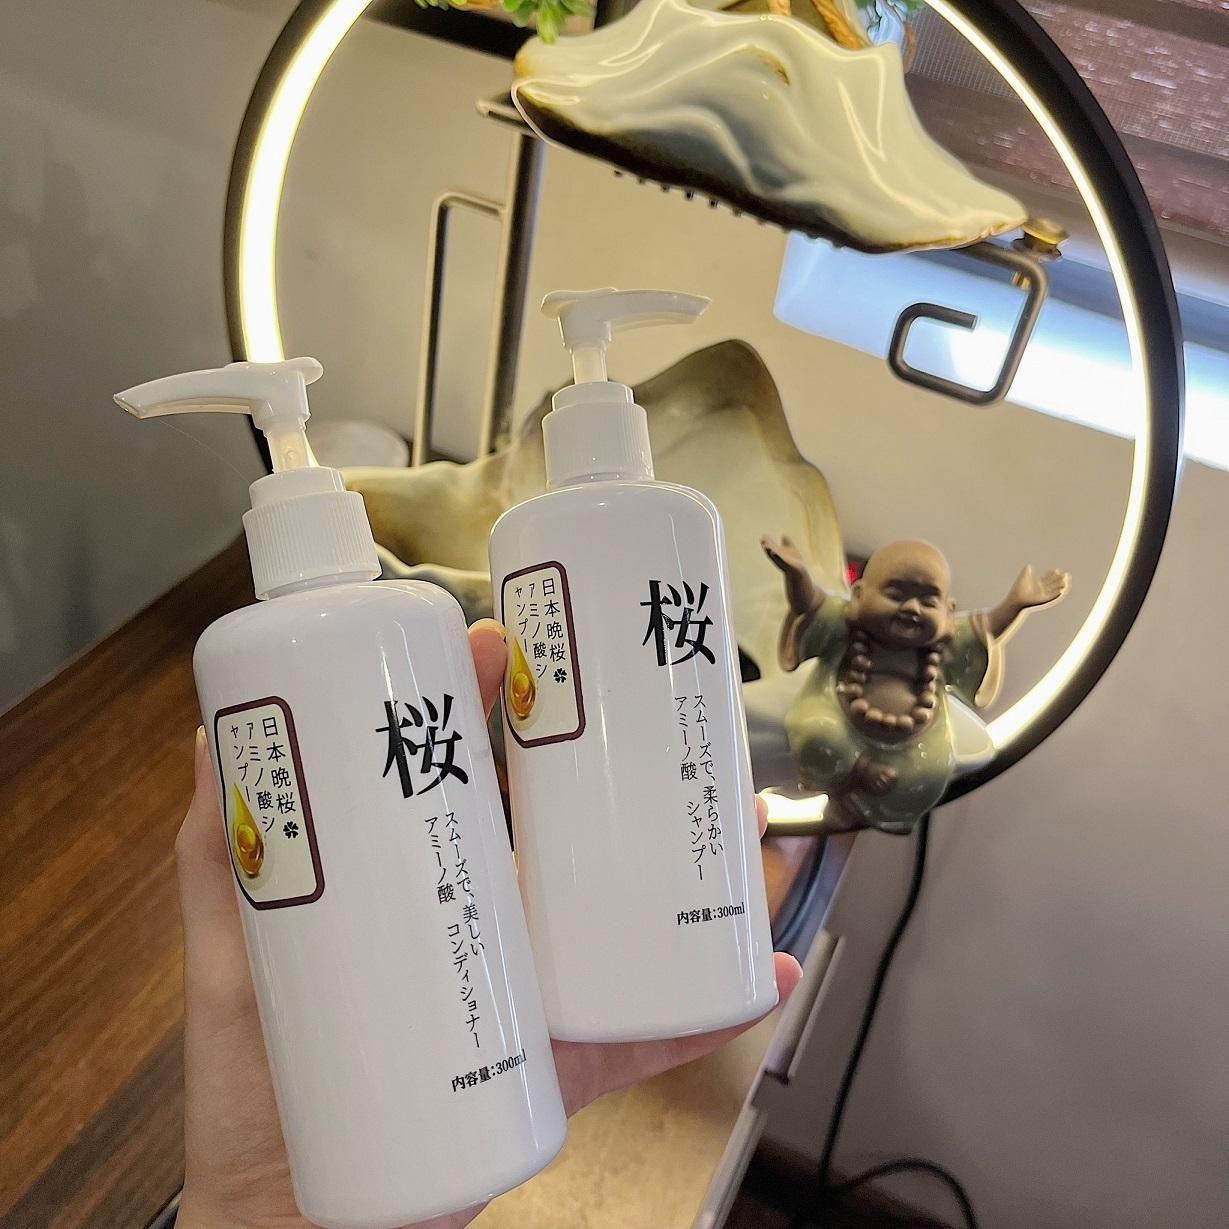 Sakura hair growth shampoo 300 ml - Blossom Mantra